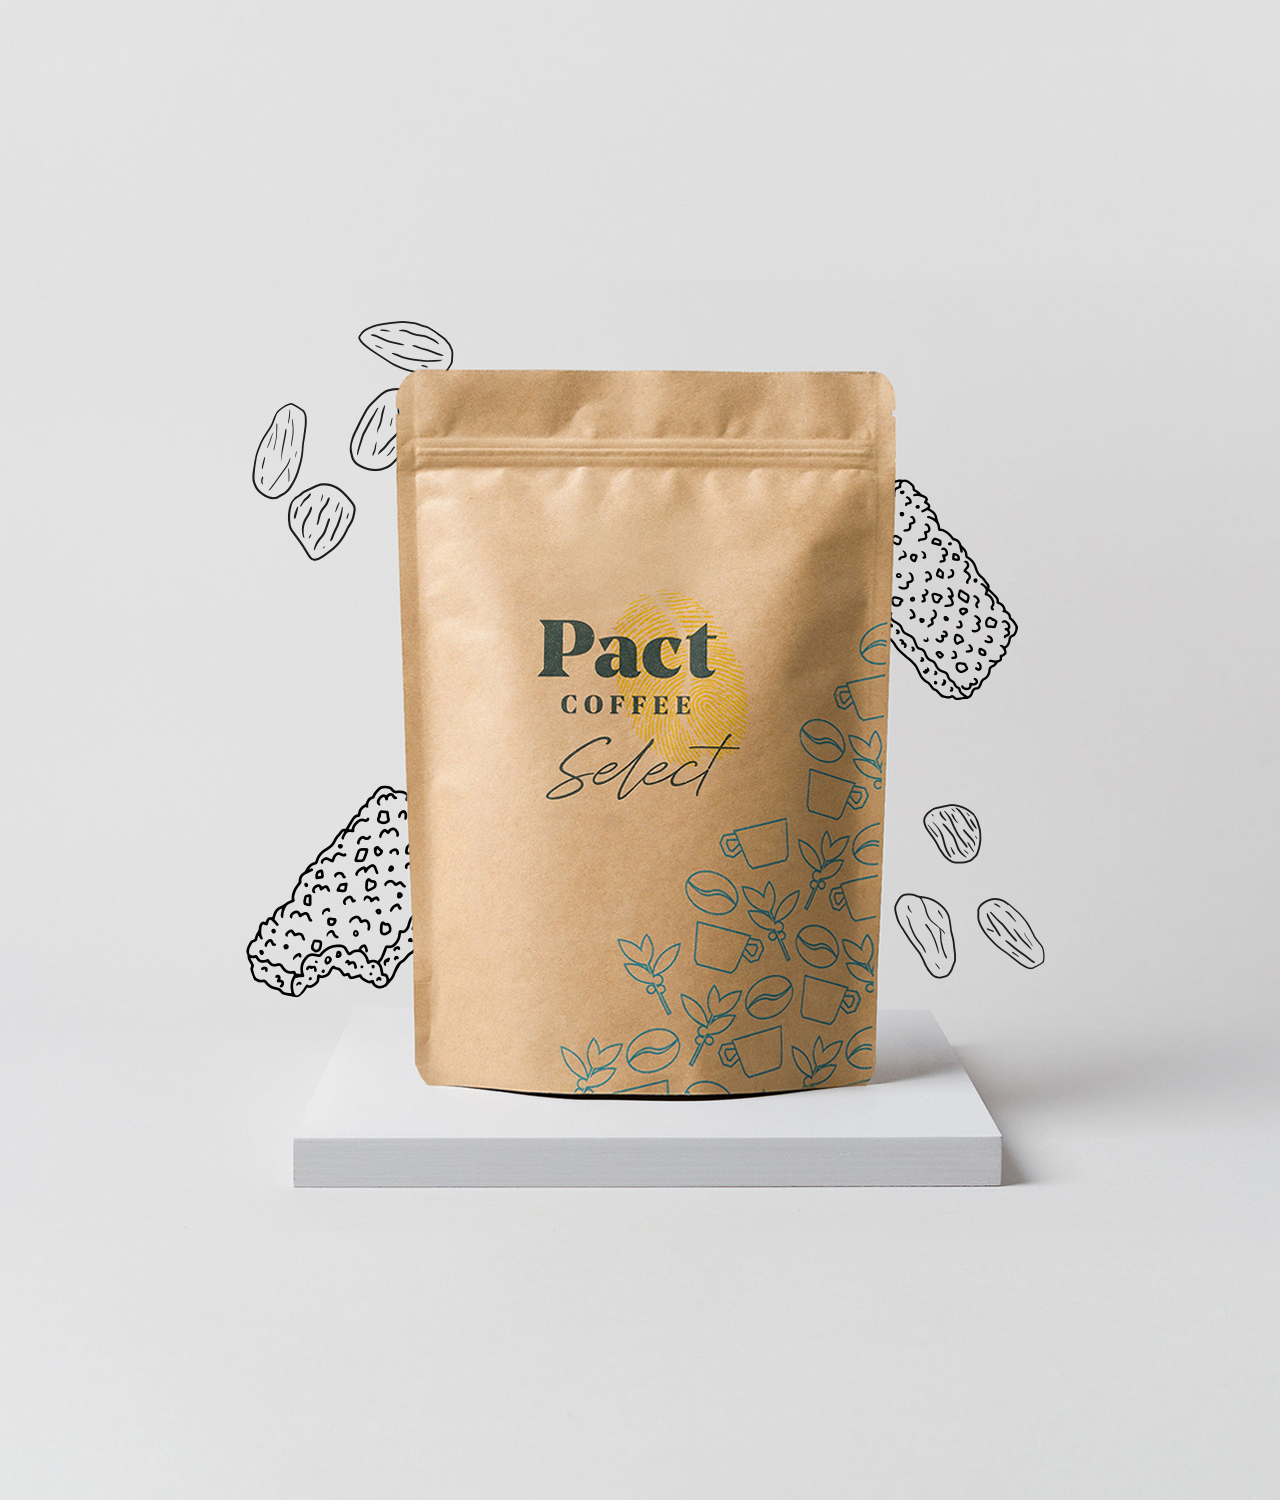 Pact Coffee - Single Origin Filter